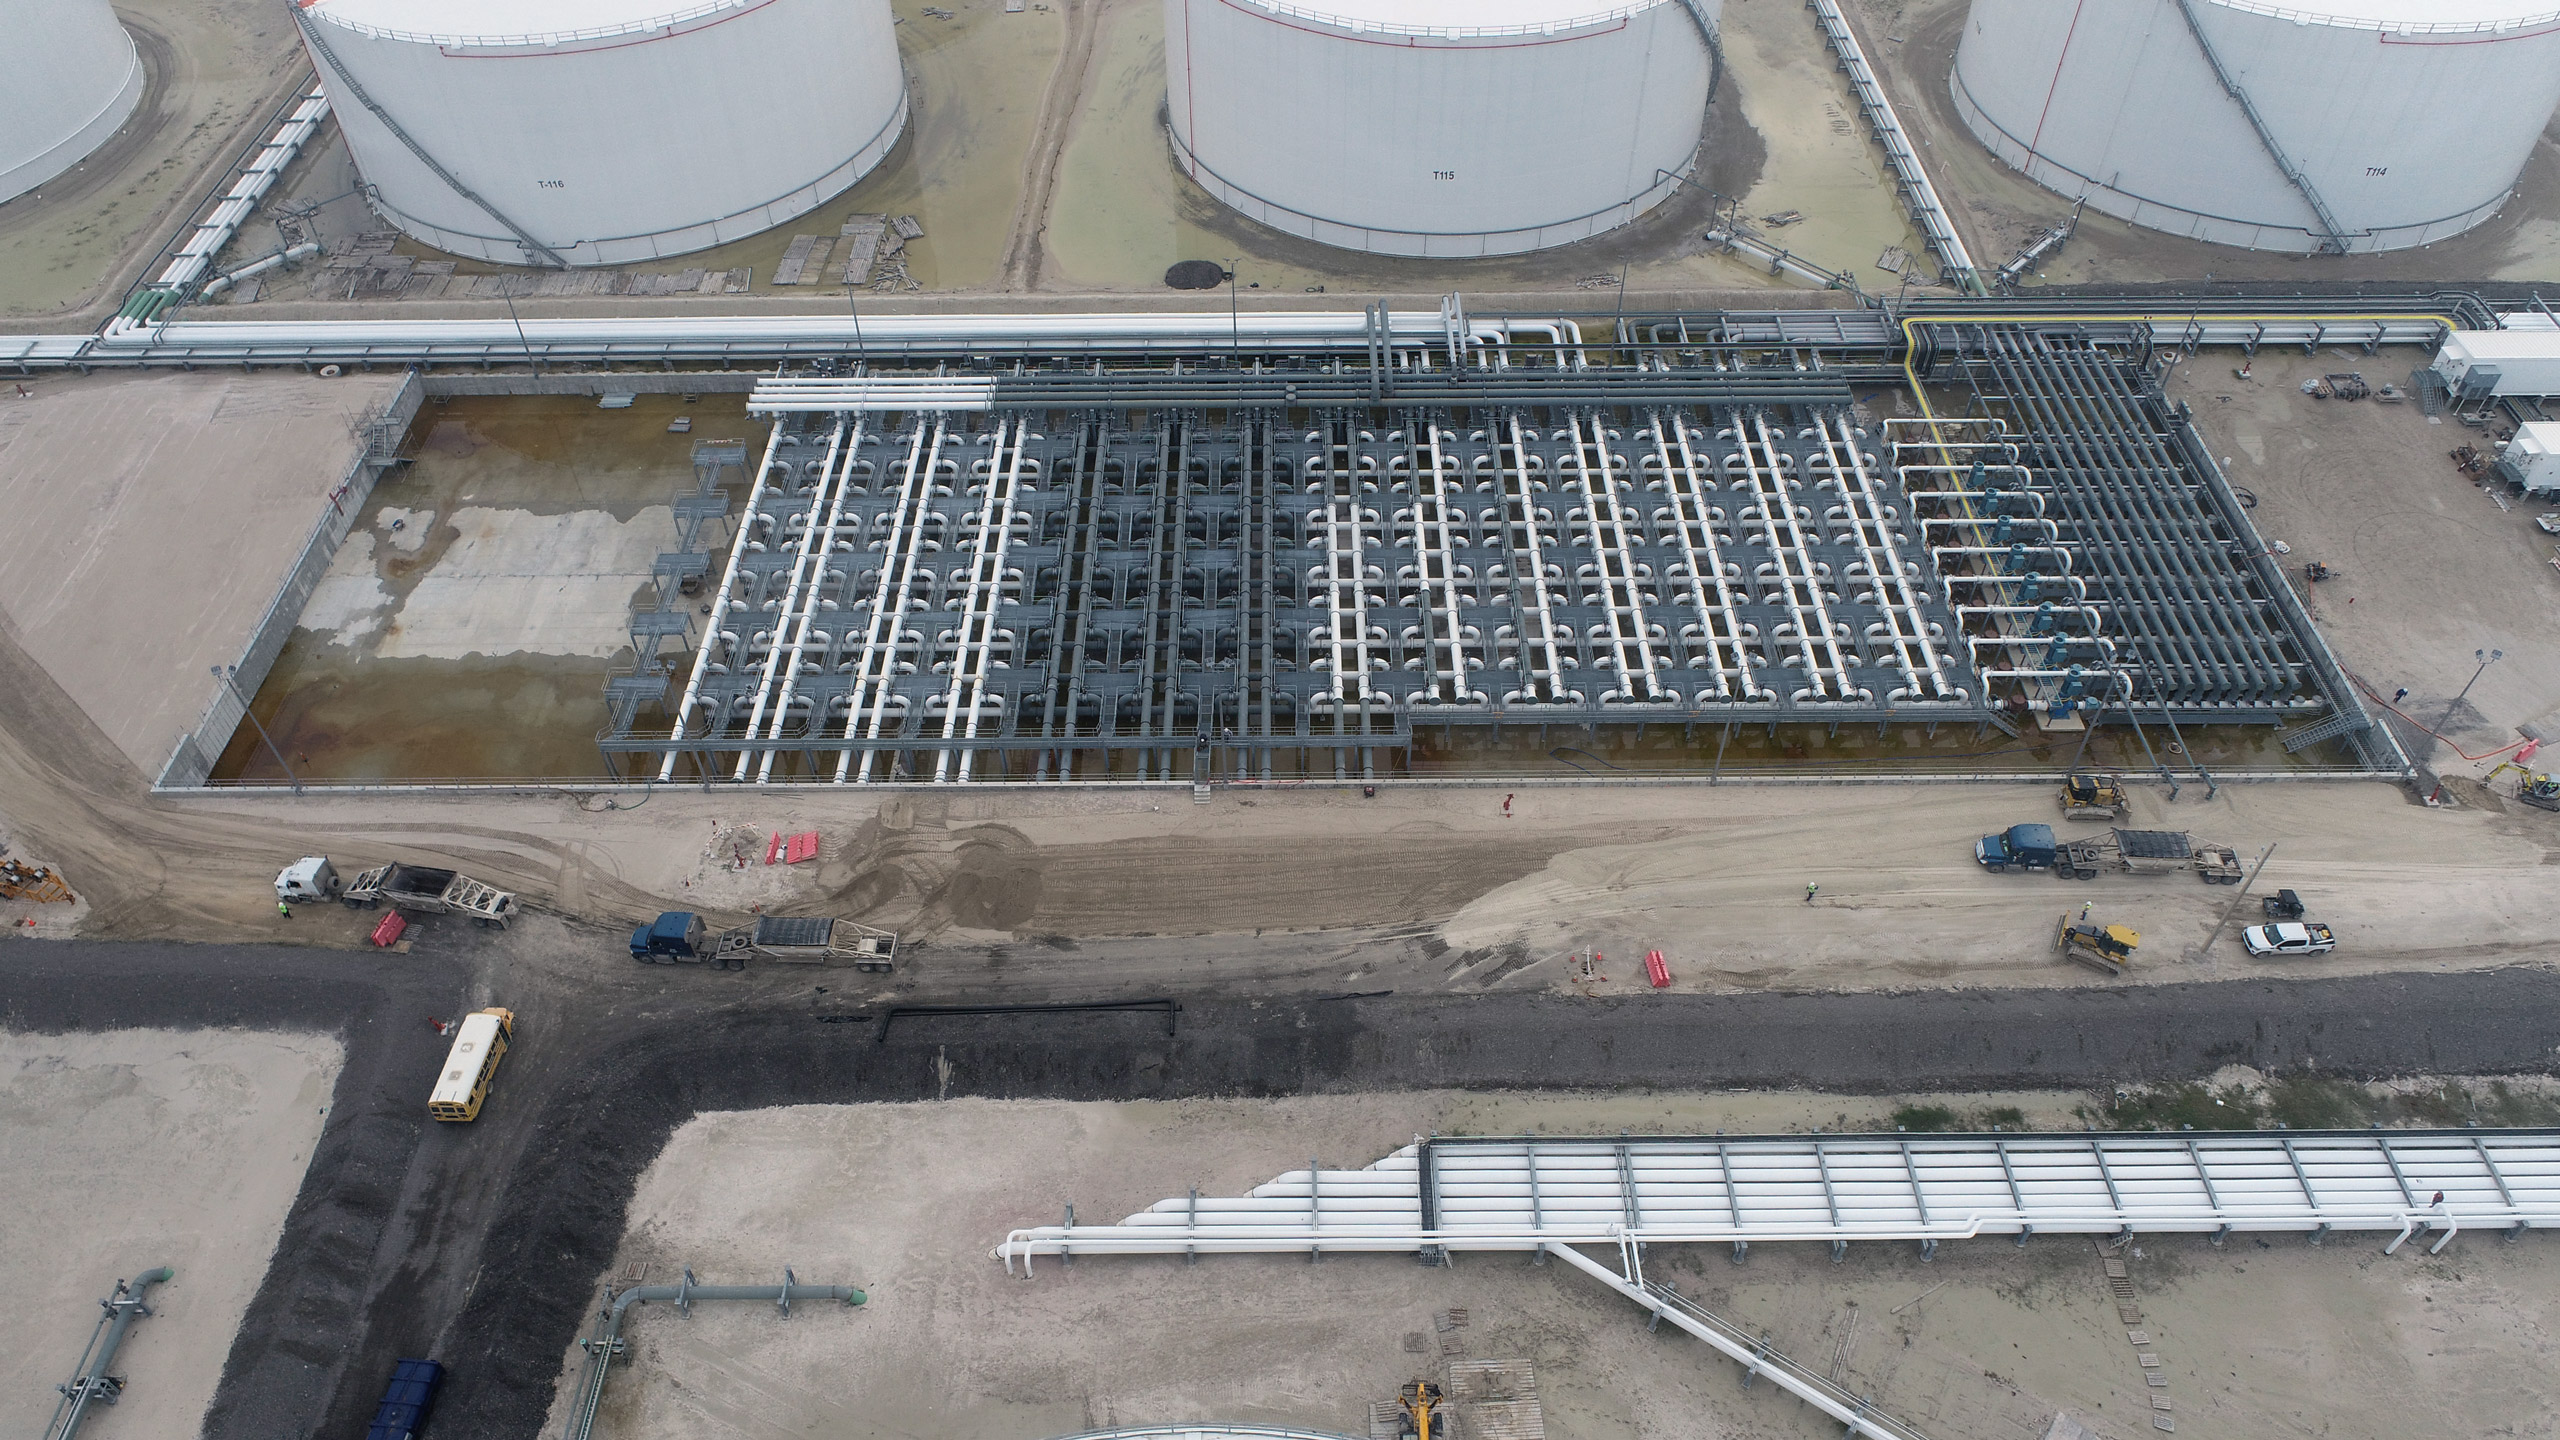 Enbridge’s Moda Ingleside Energy Center Crude Oil Storage and Export Terminal